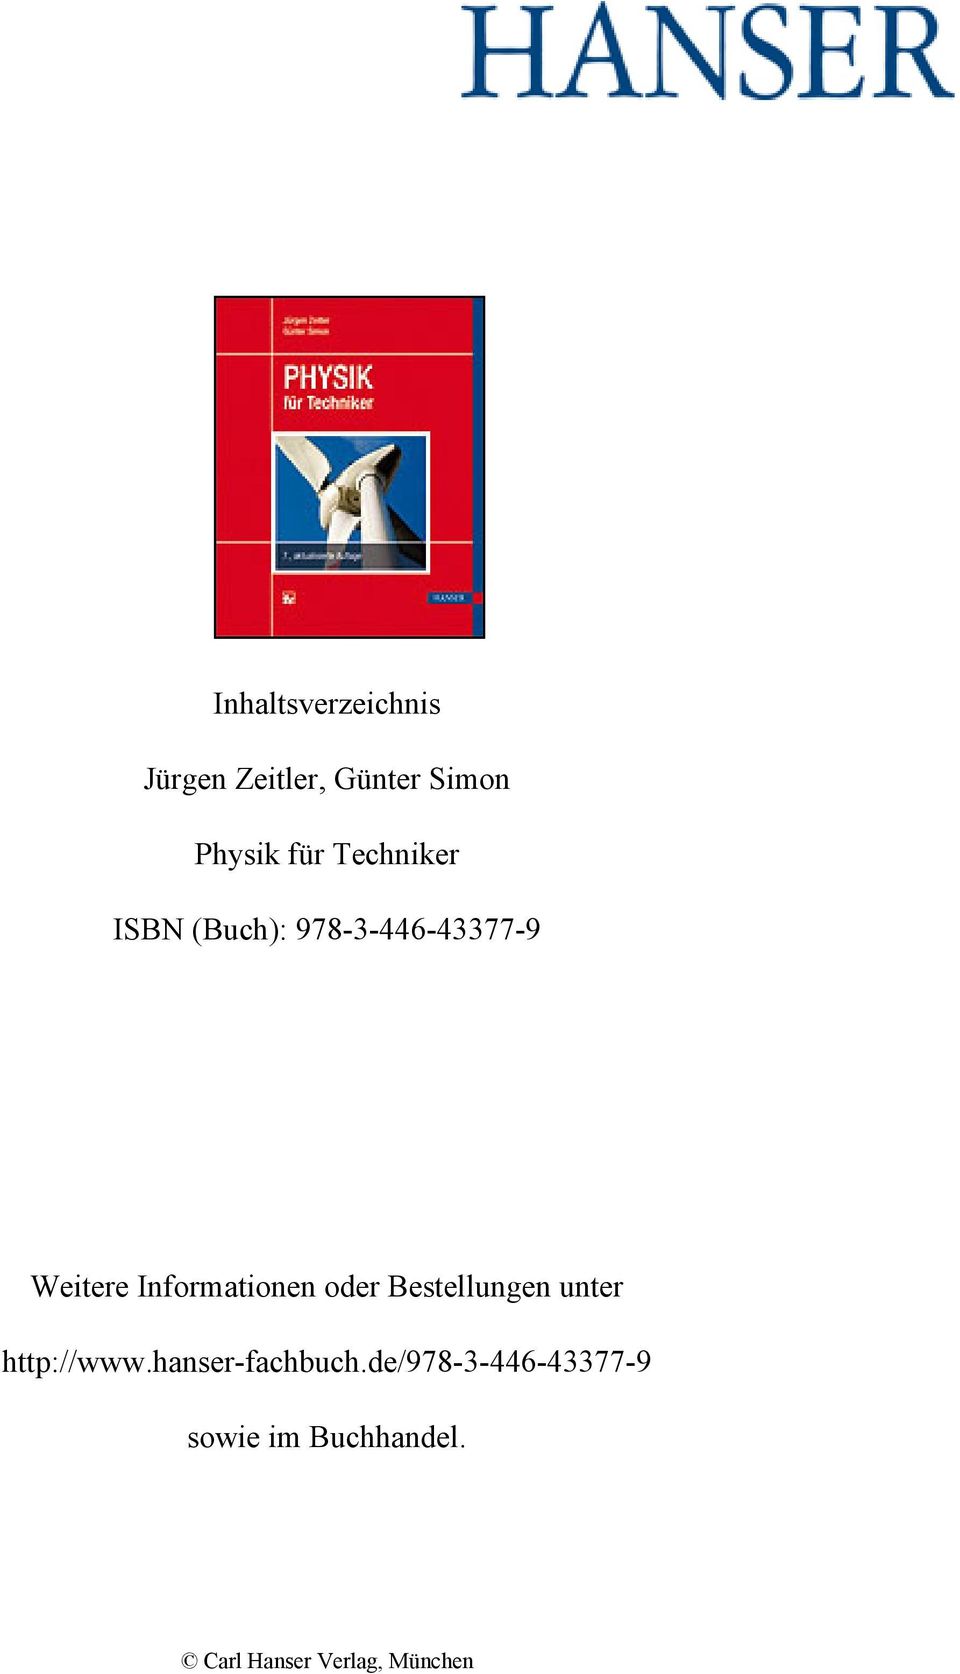 Bestellungen unter http://www.hanser-fachbuch.